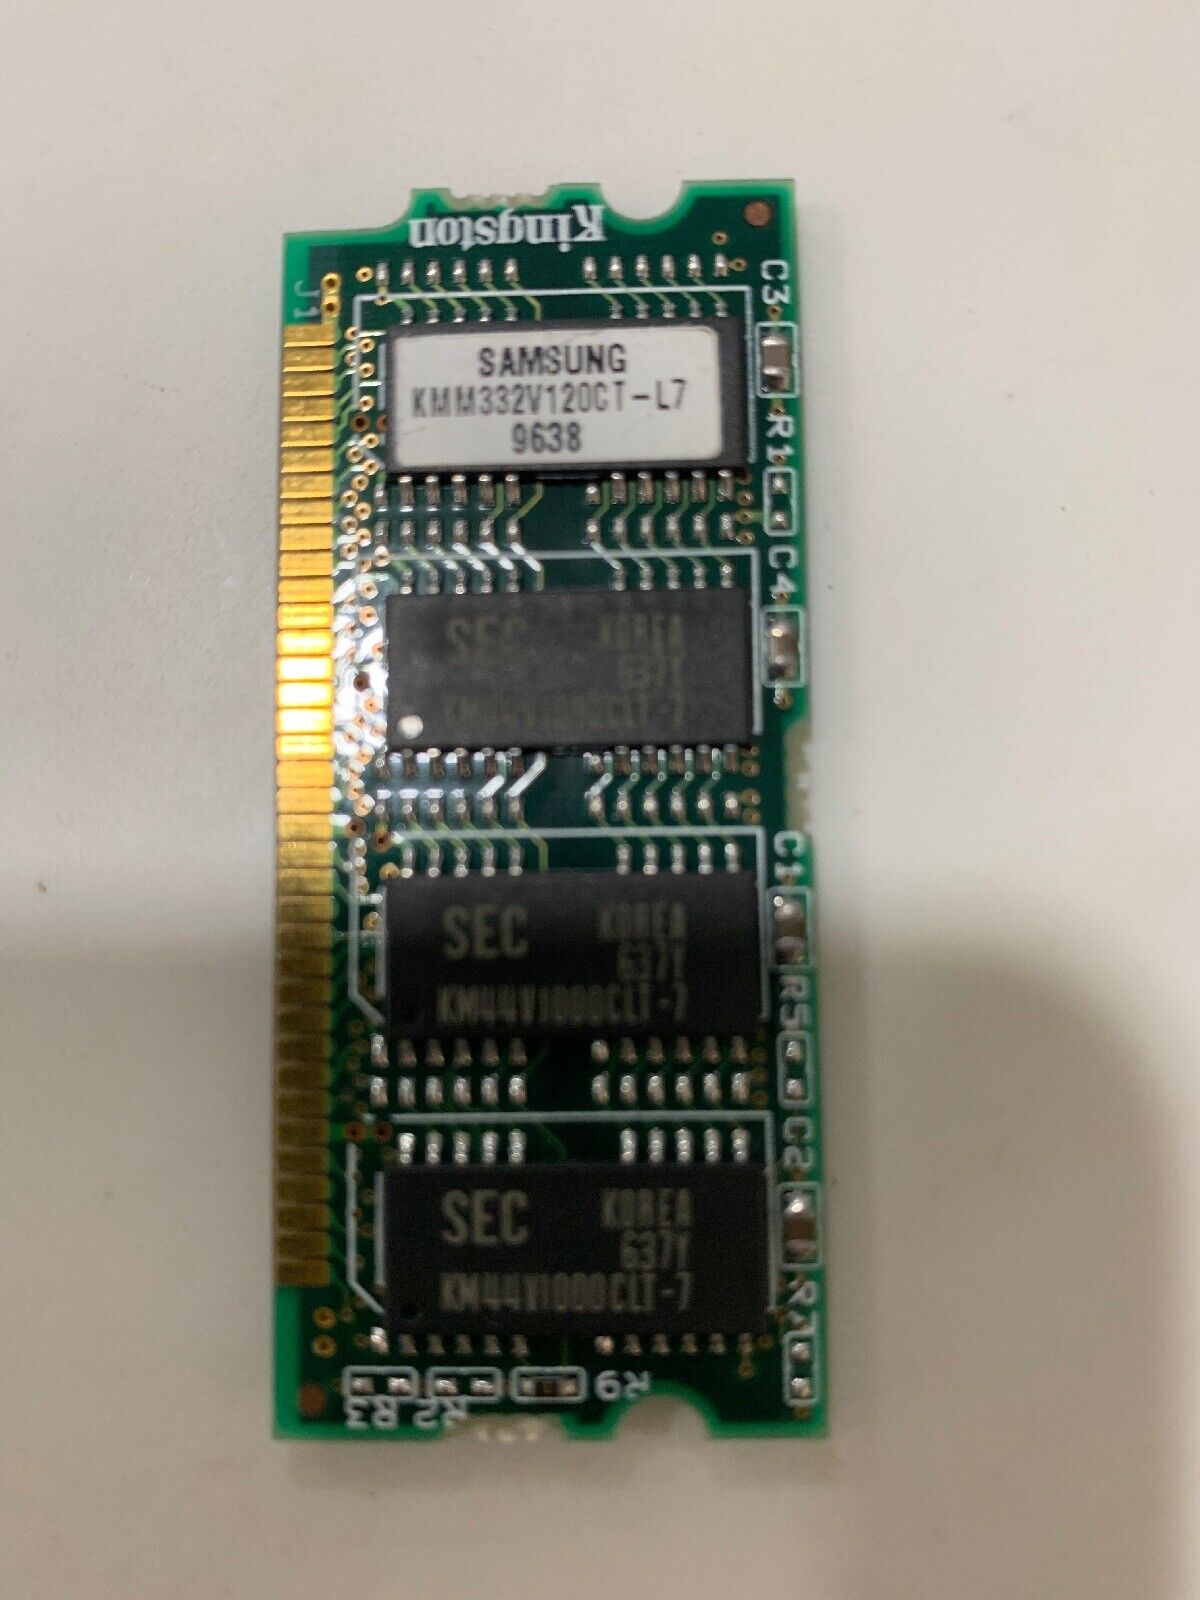 KMM332V120CT-L7 - Kingston 4MB Memory Module for Kingston